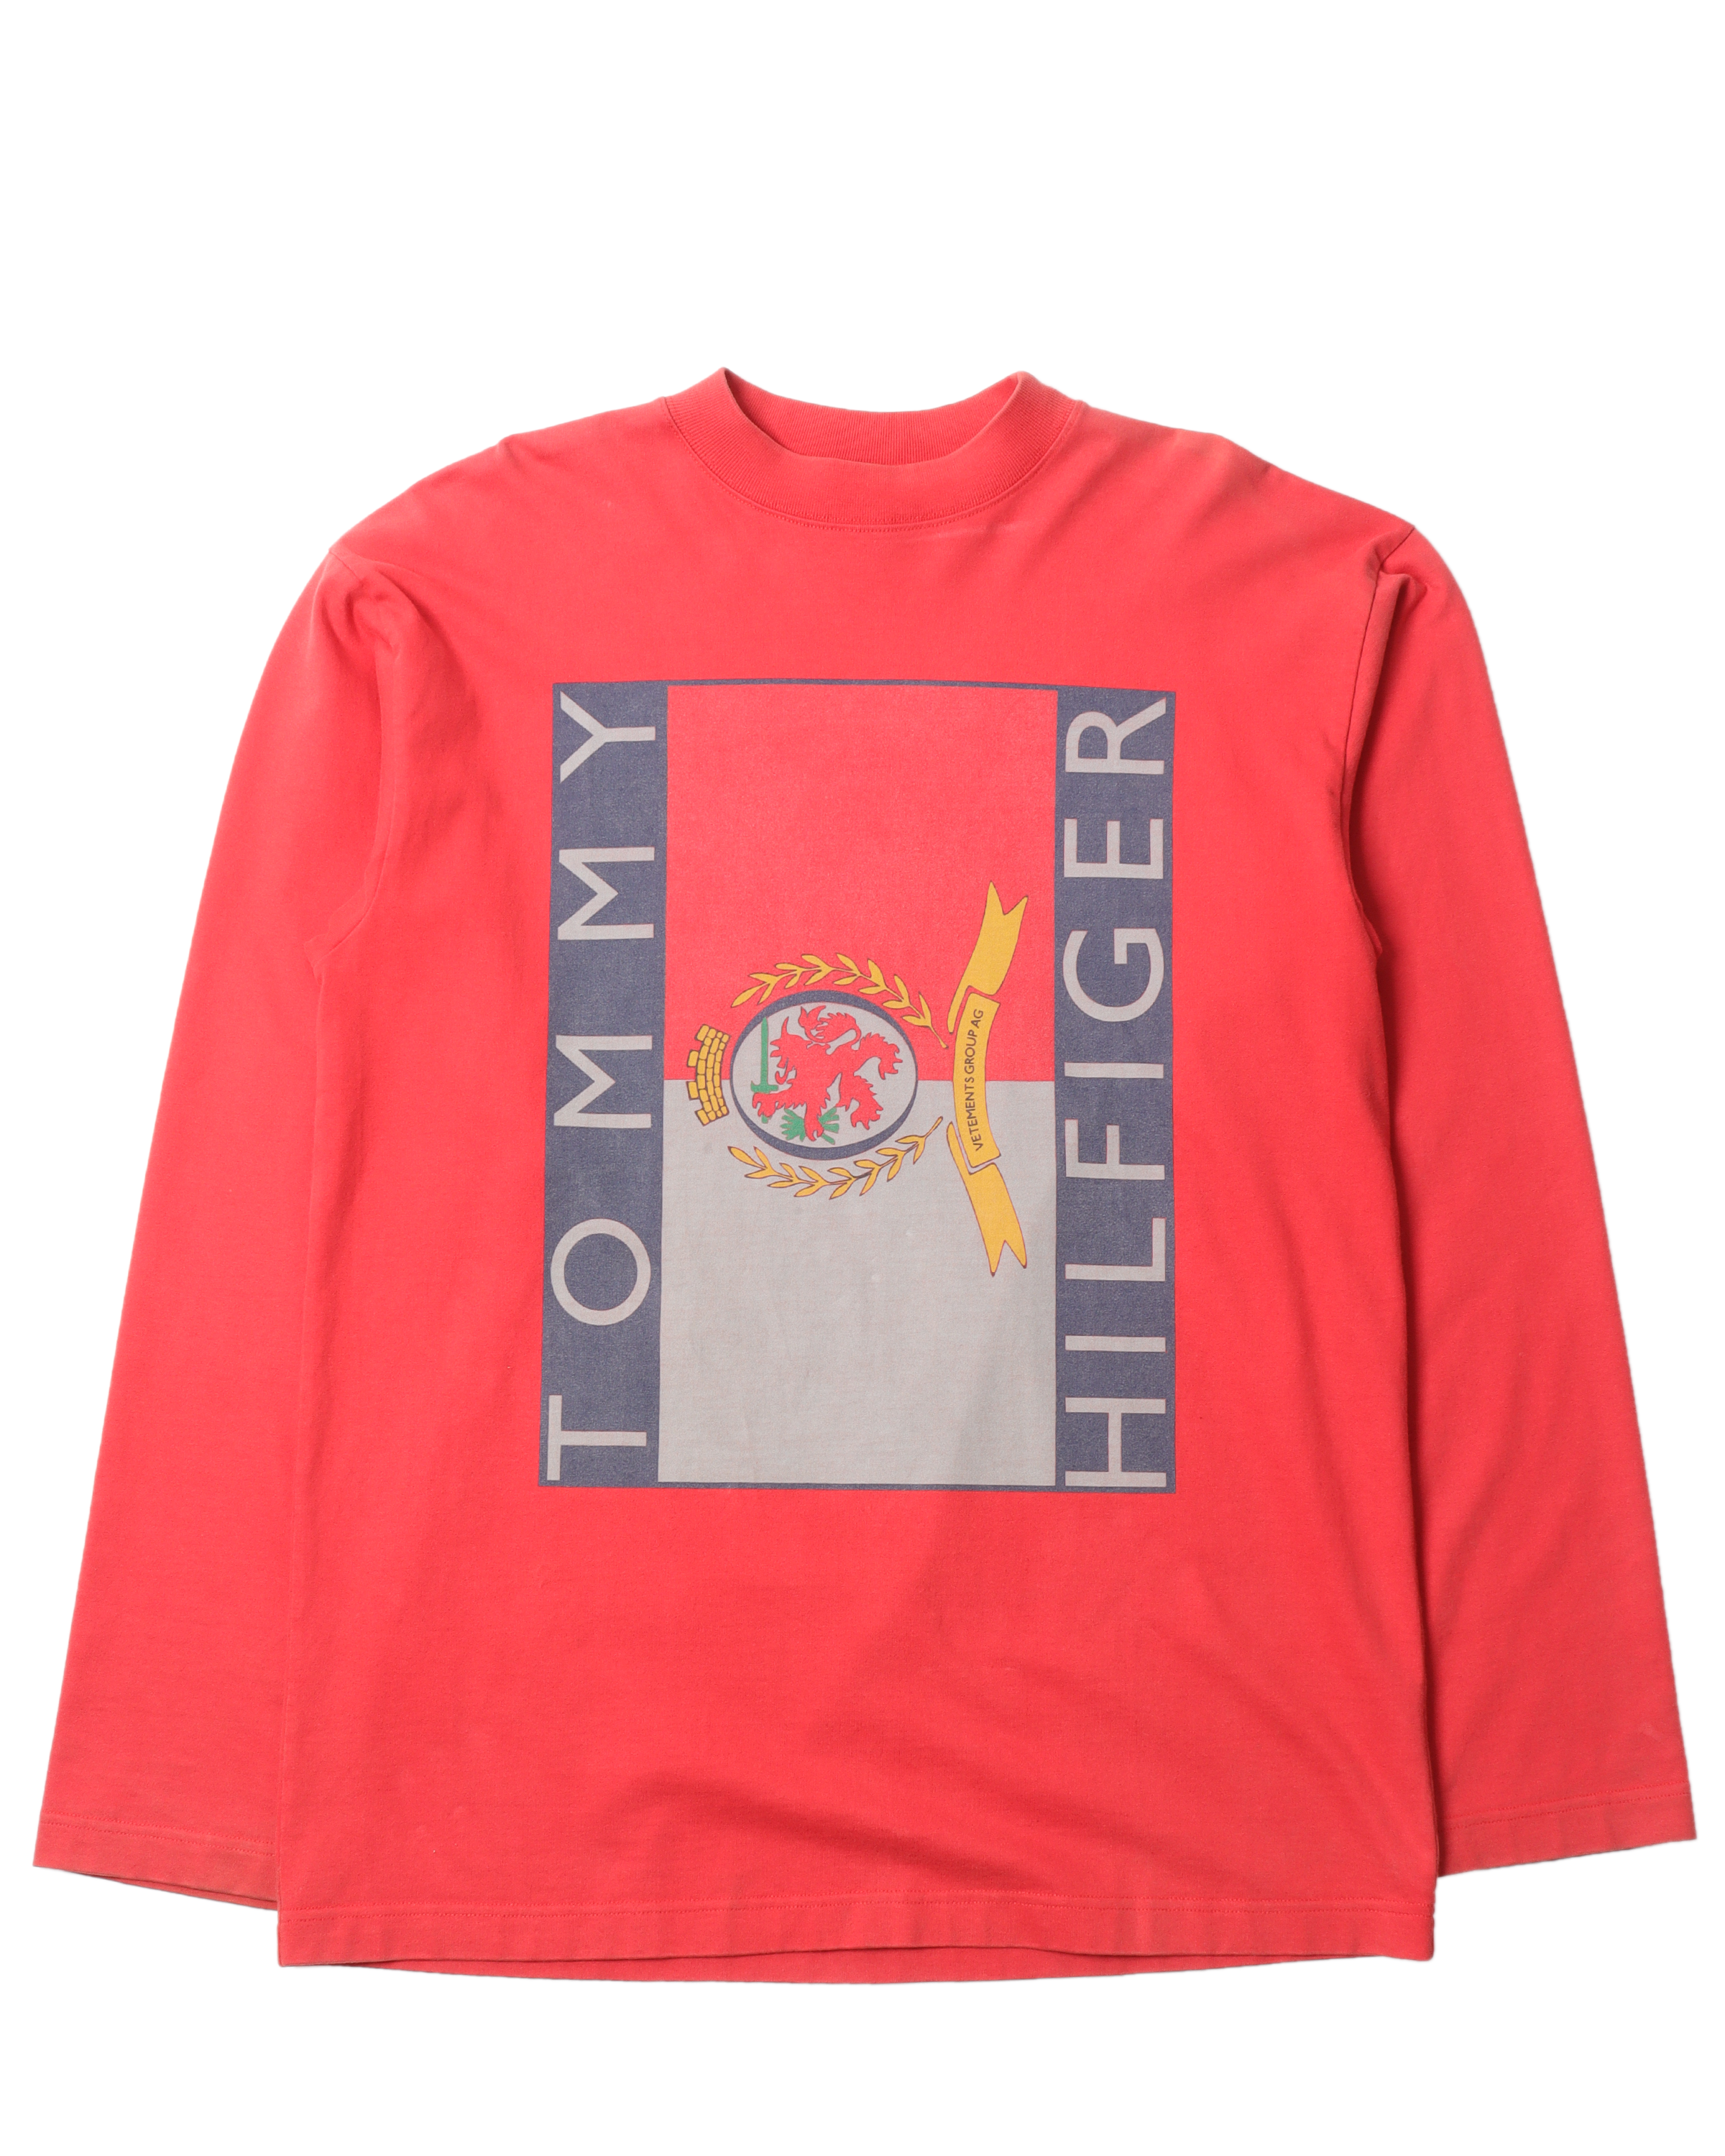 Vetements SS18 Tommy Hilfiger Oversized L/S T-Shirt